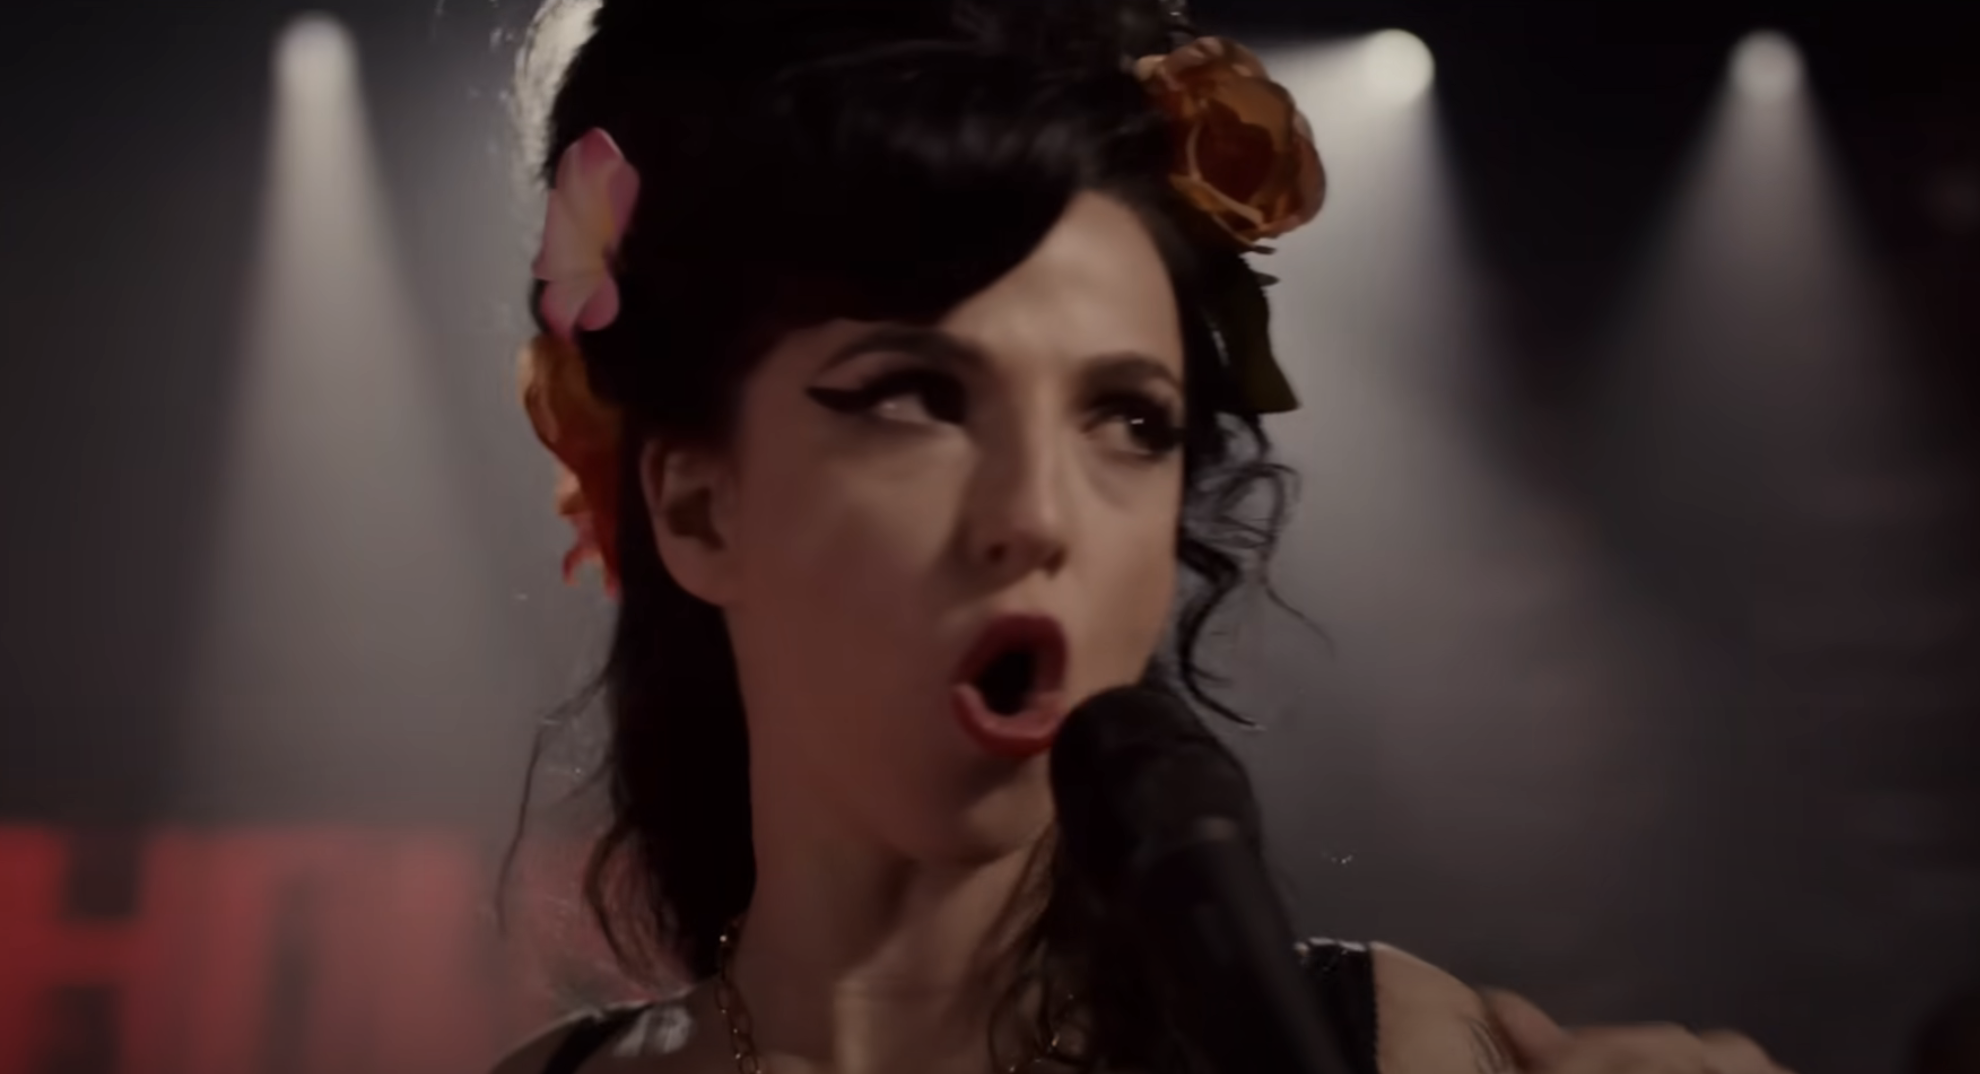 Marisa Abela as Amy Winehouse singing onstage